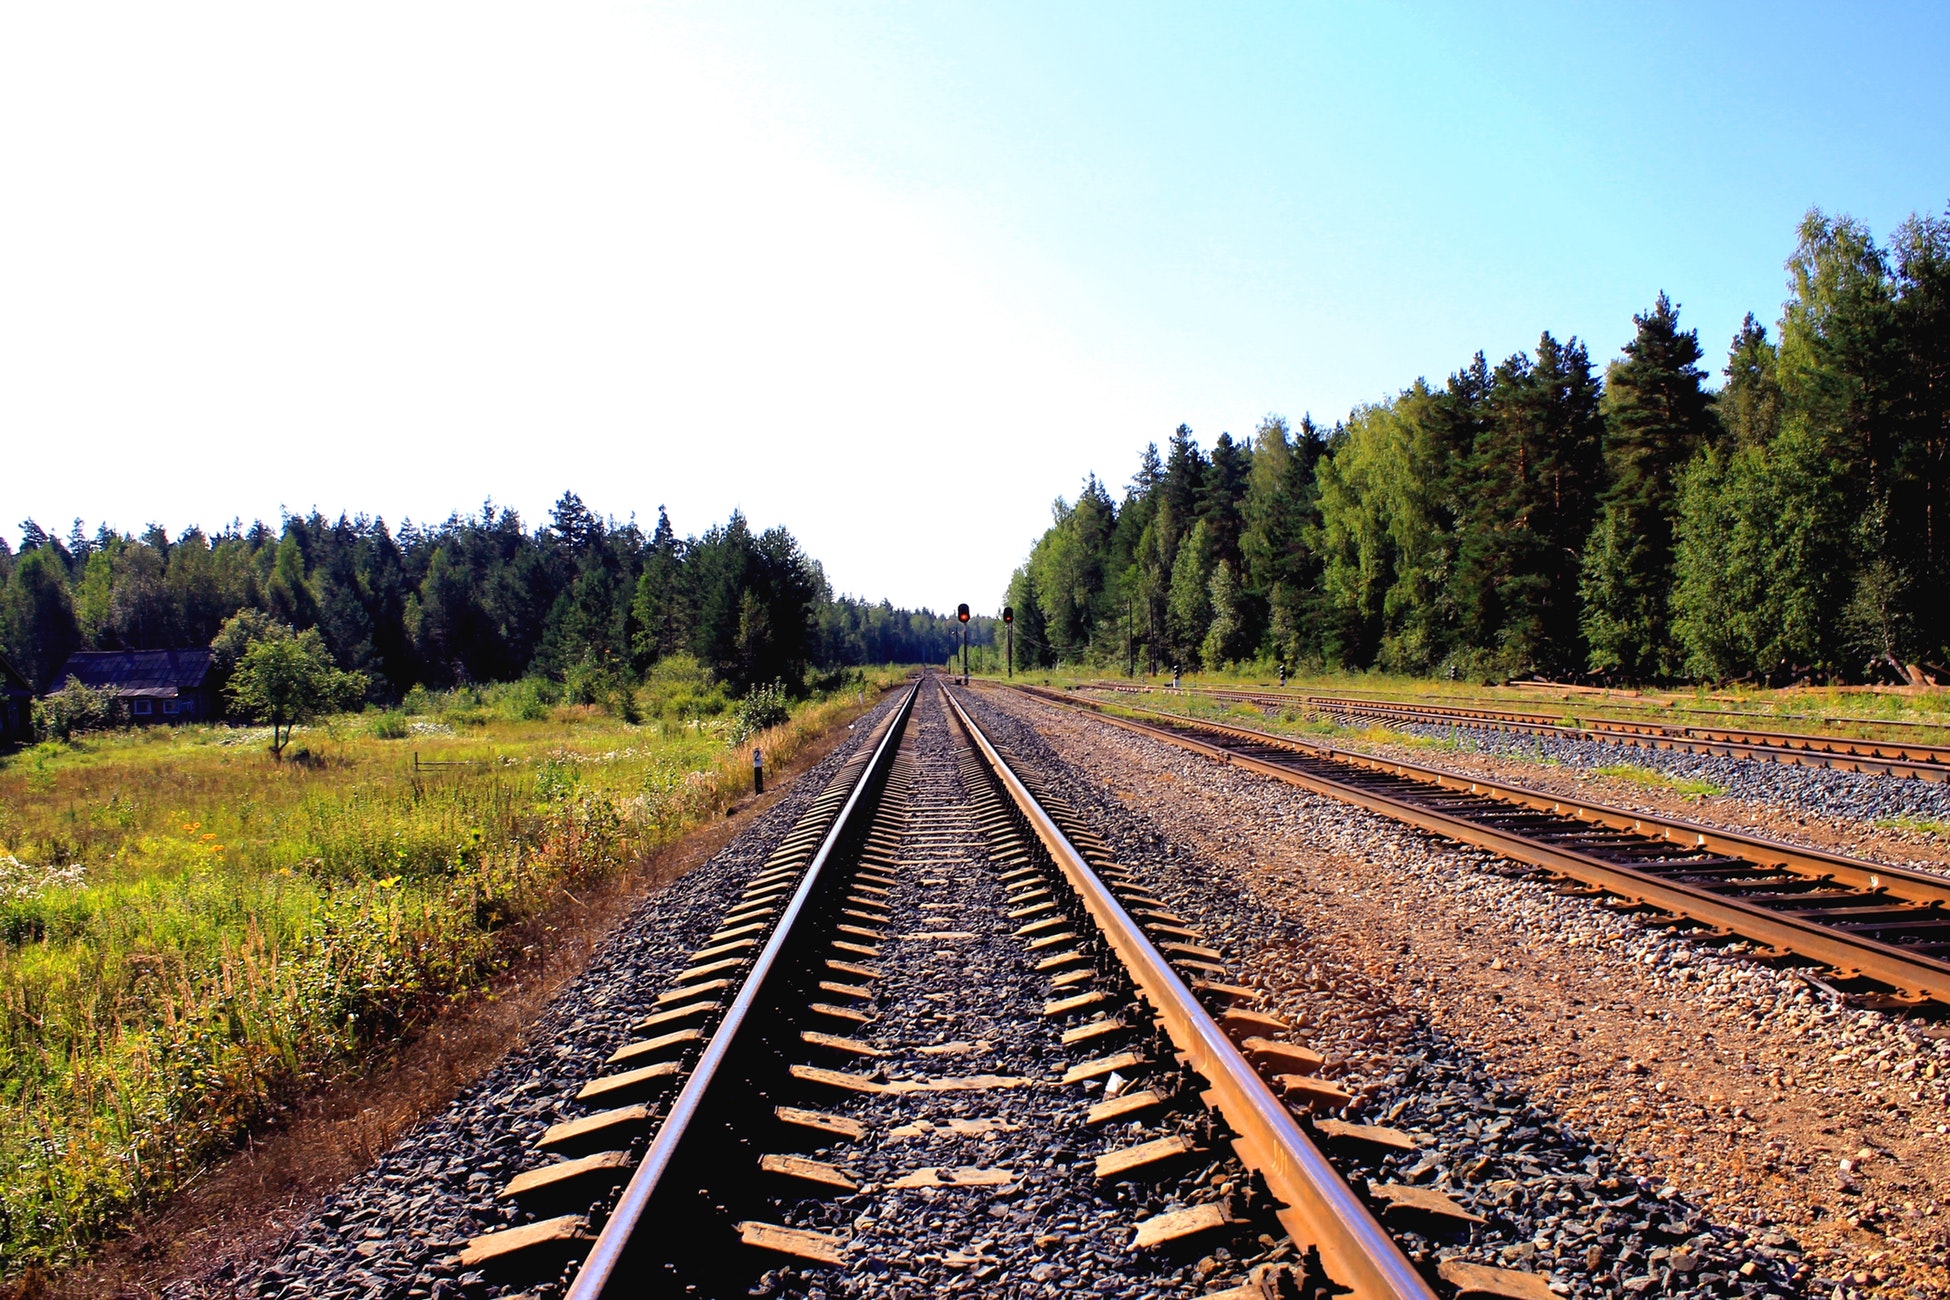 Train tracks. Photograph by Kholodnitskiy Maksim via Unsplash.